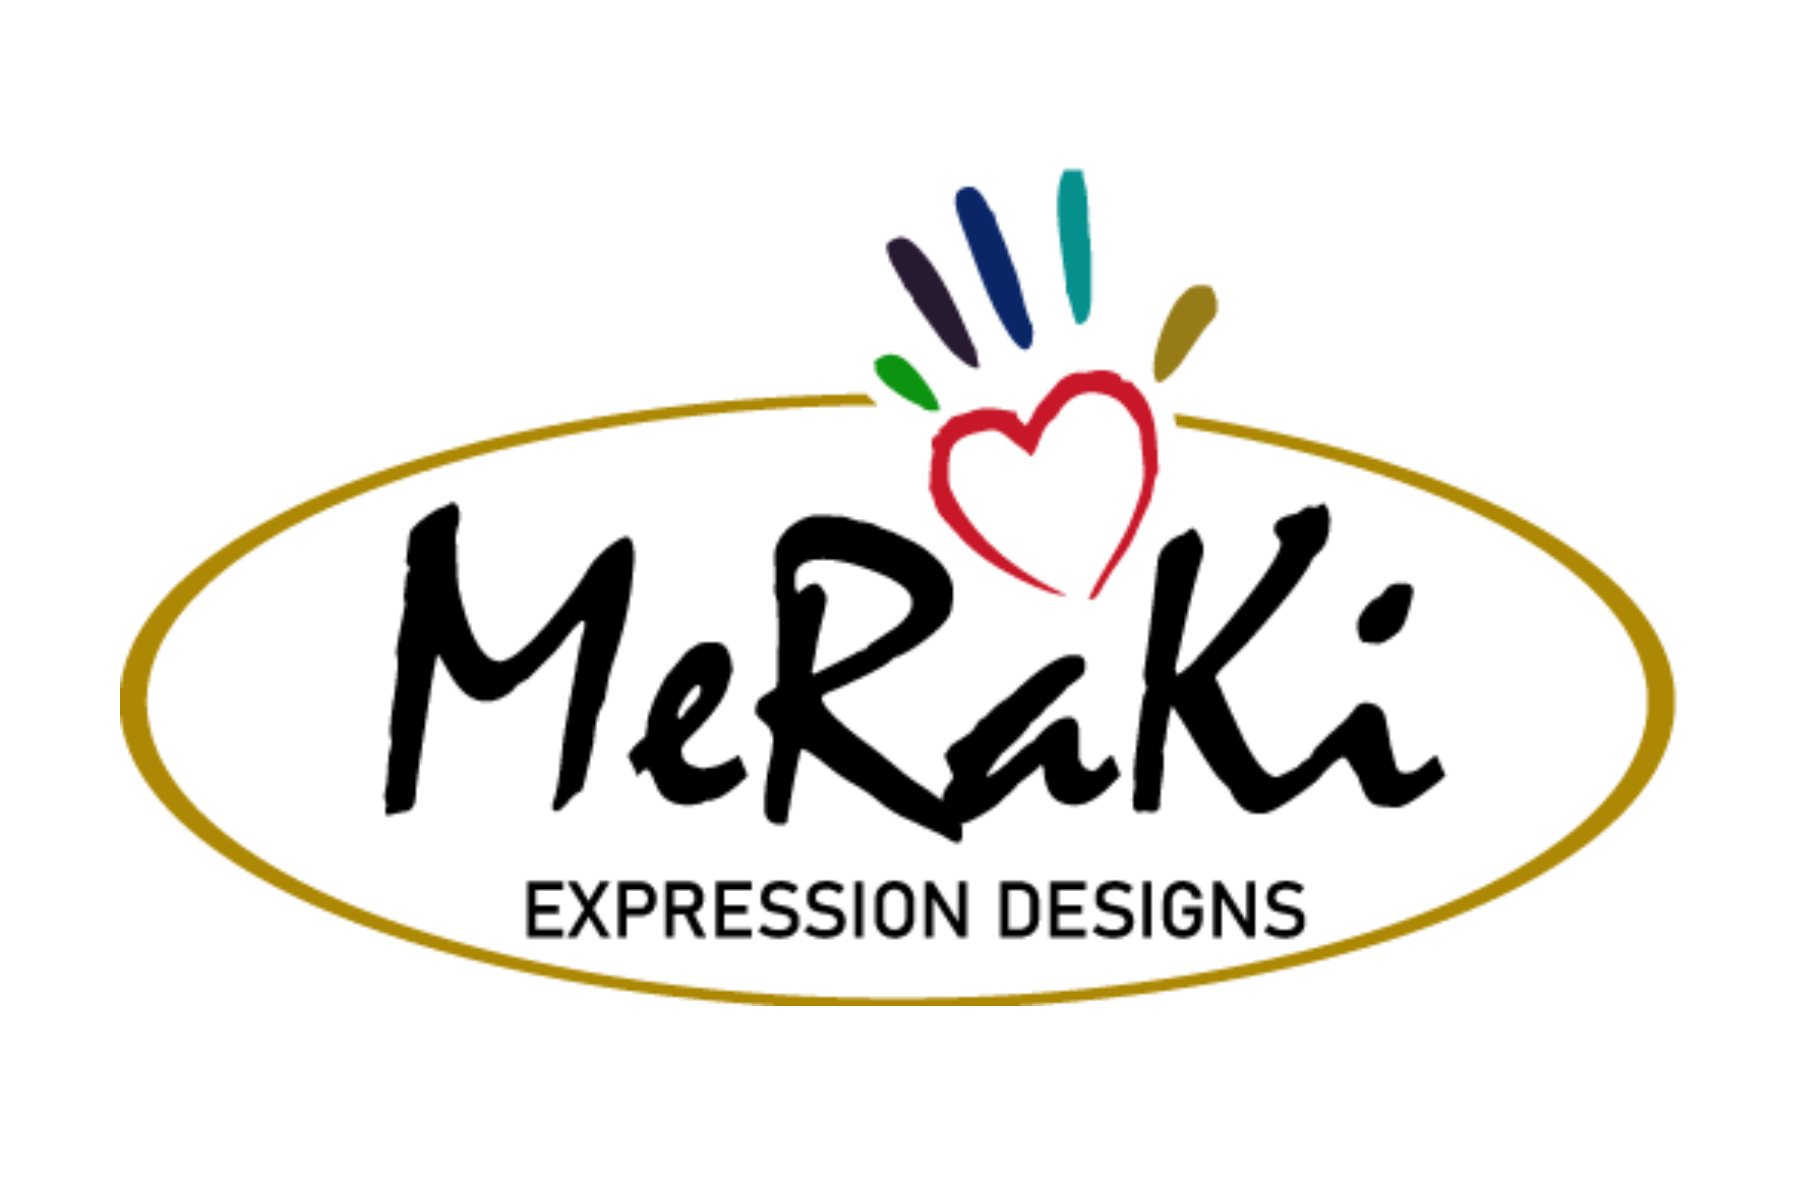 Meraki Expression Designs